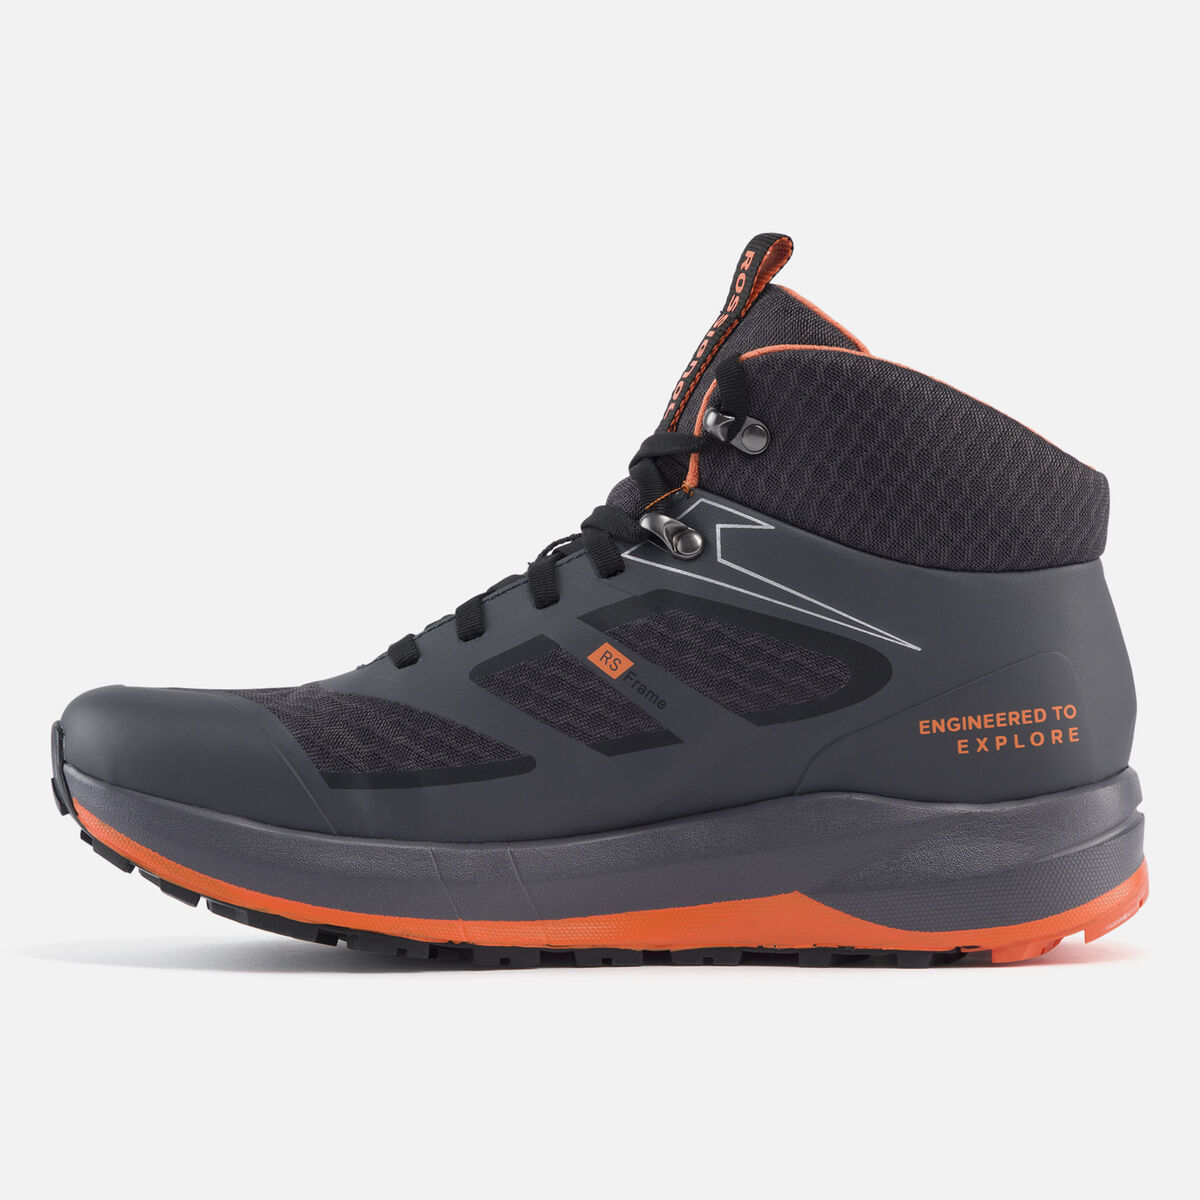 Men's dark grey lightweight hiking shoes